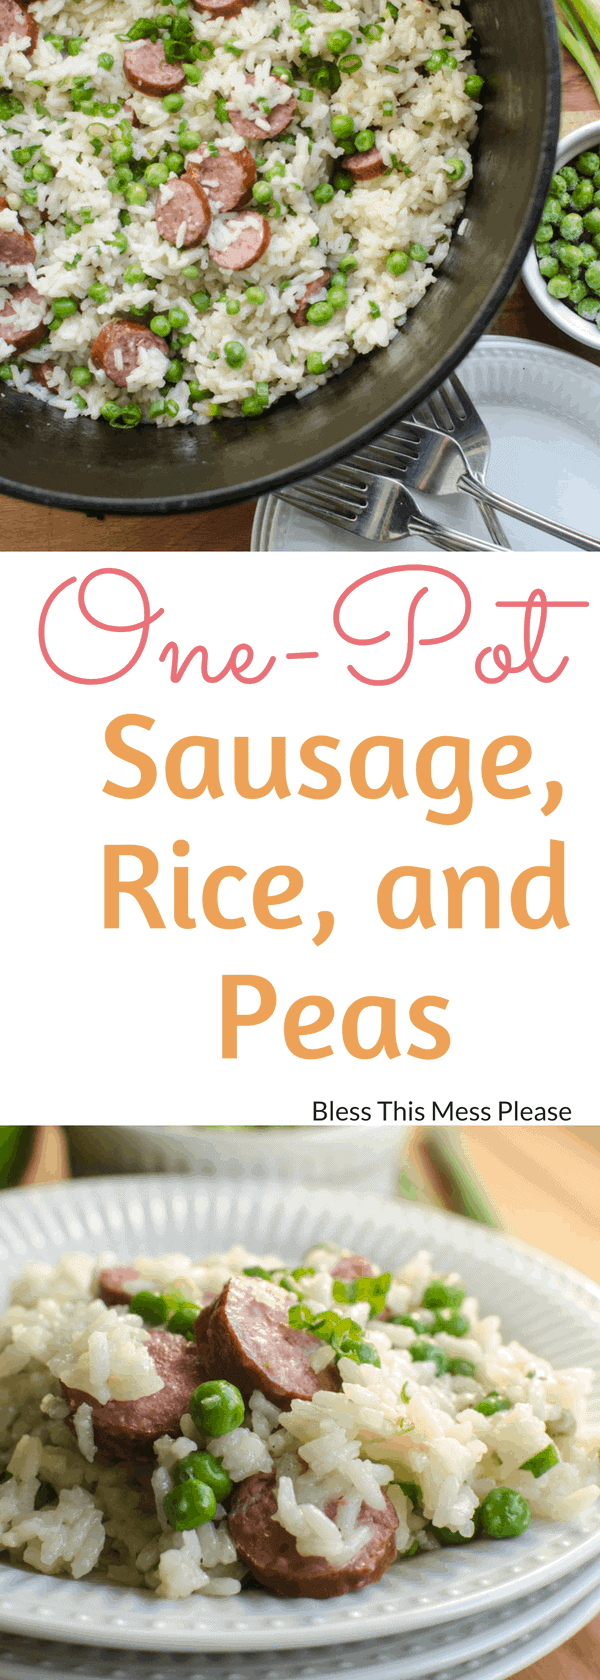 One-Pot Sausage, Rice, and Peas